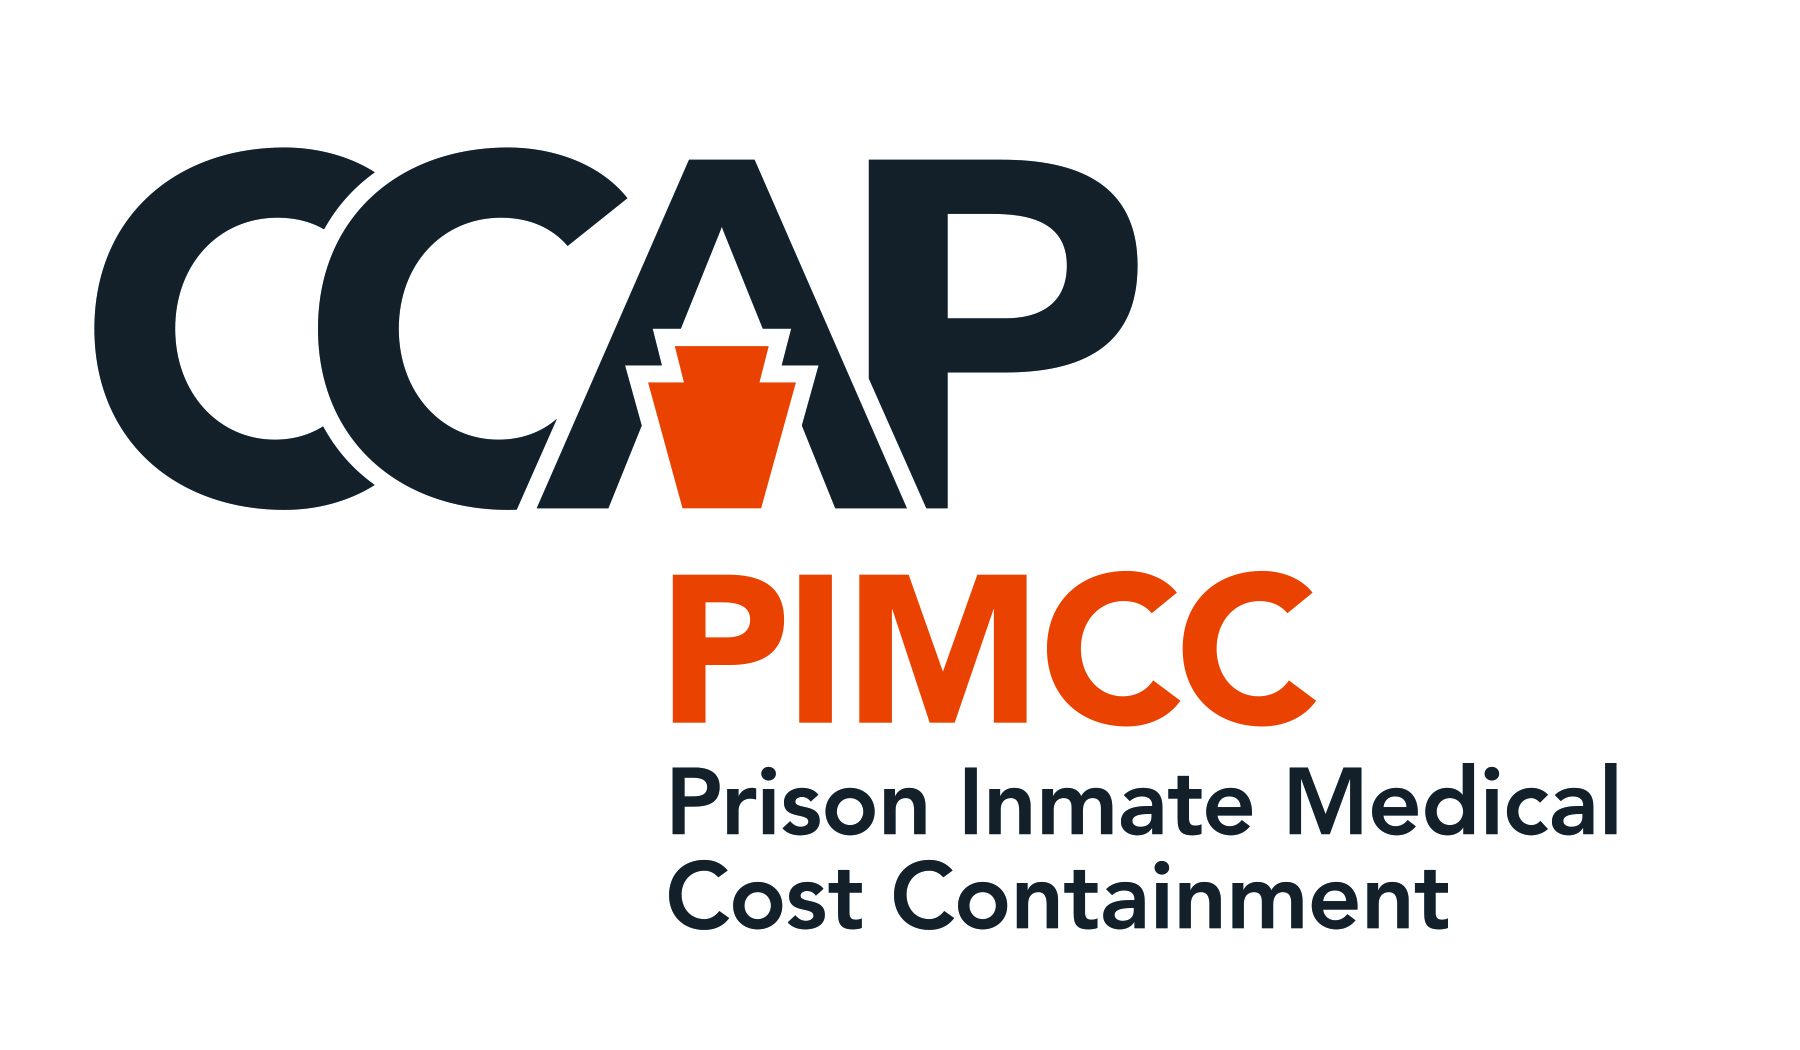 CCAP PIMCC Logo